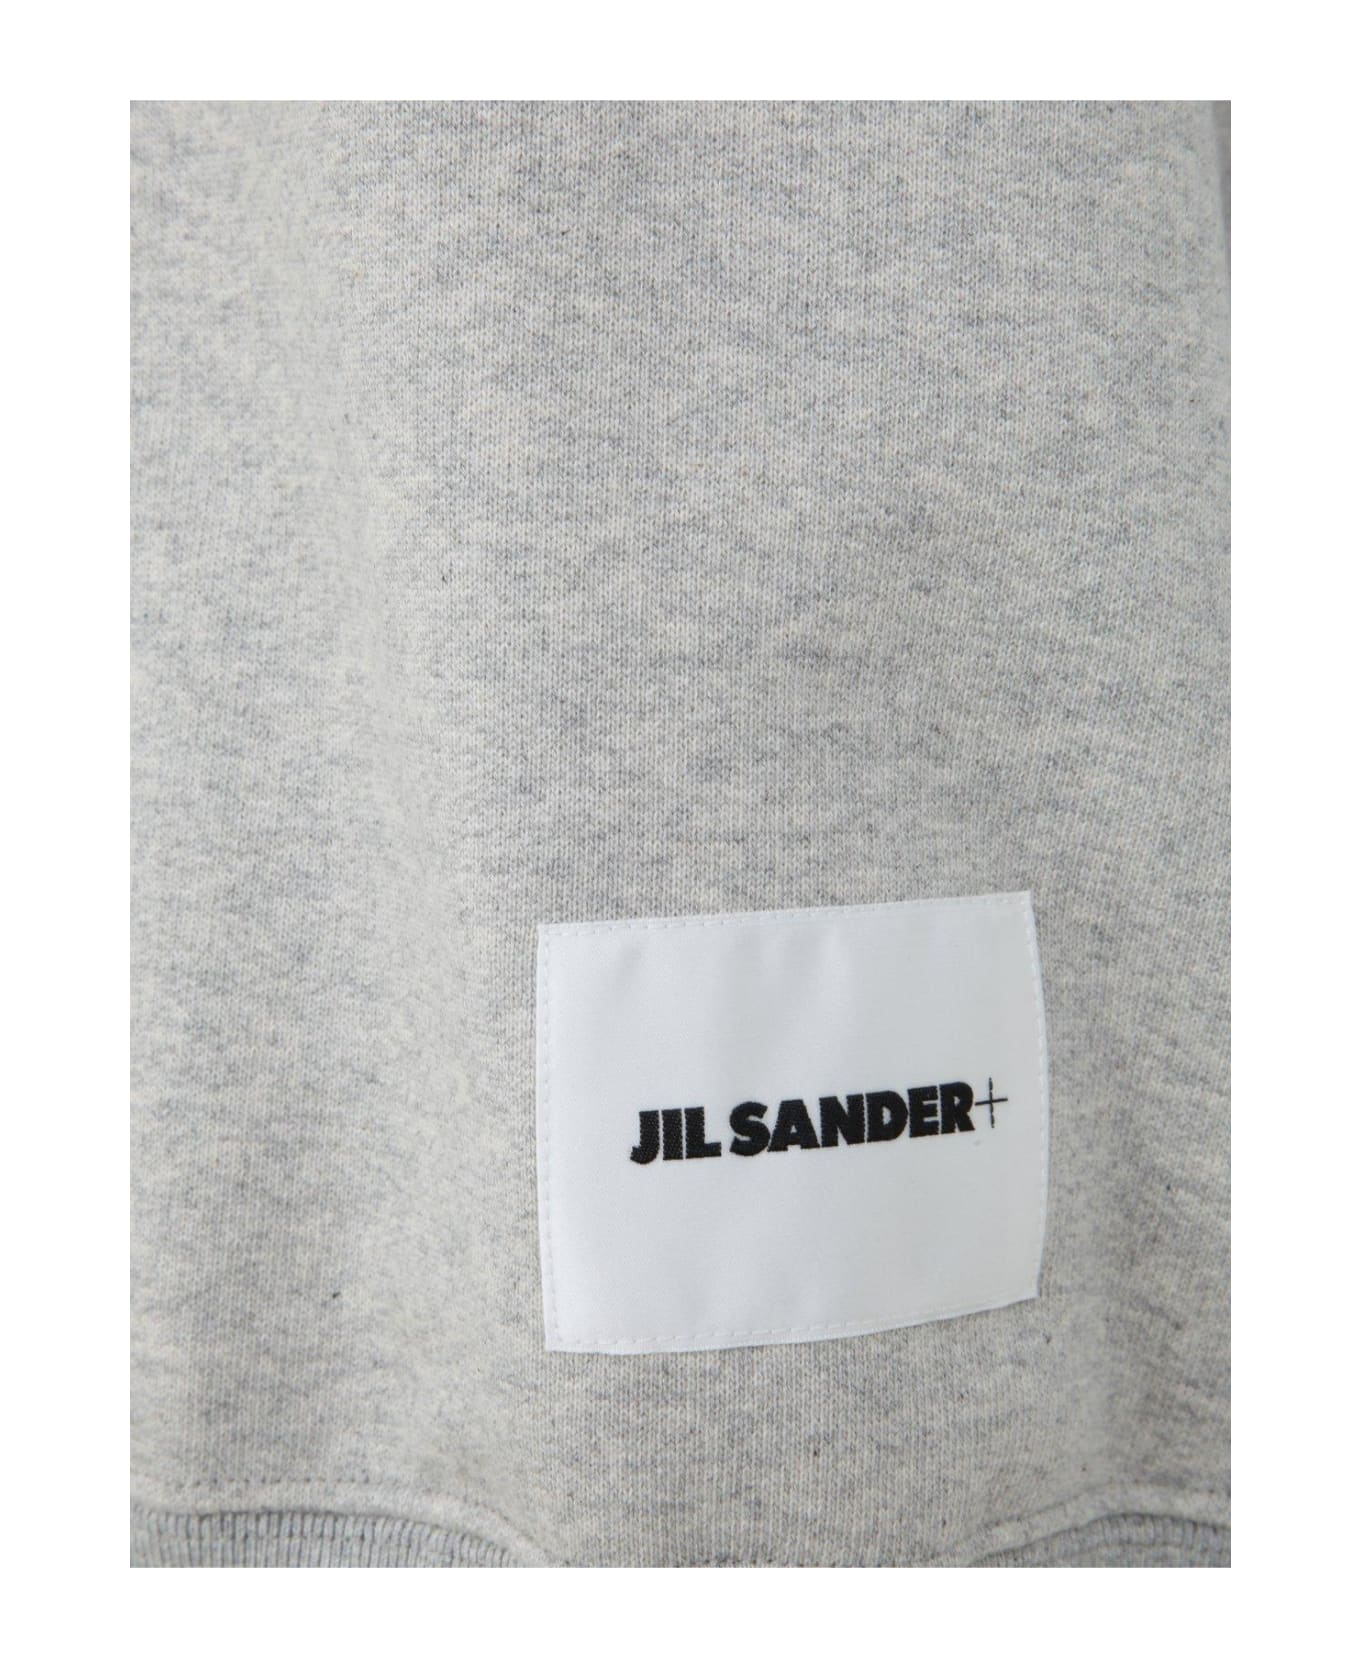 Jil Sander + Logo Patch Short-sleeved T-shirt